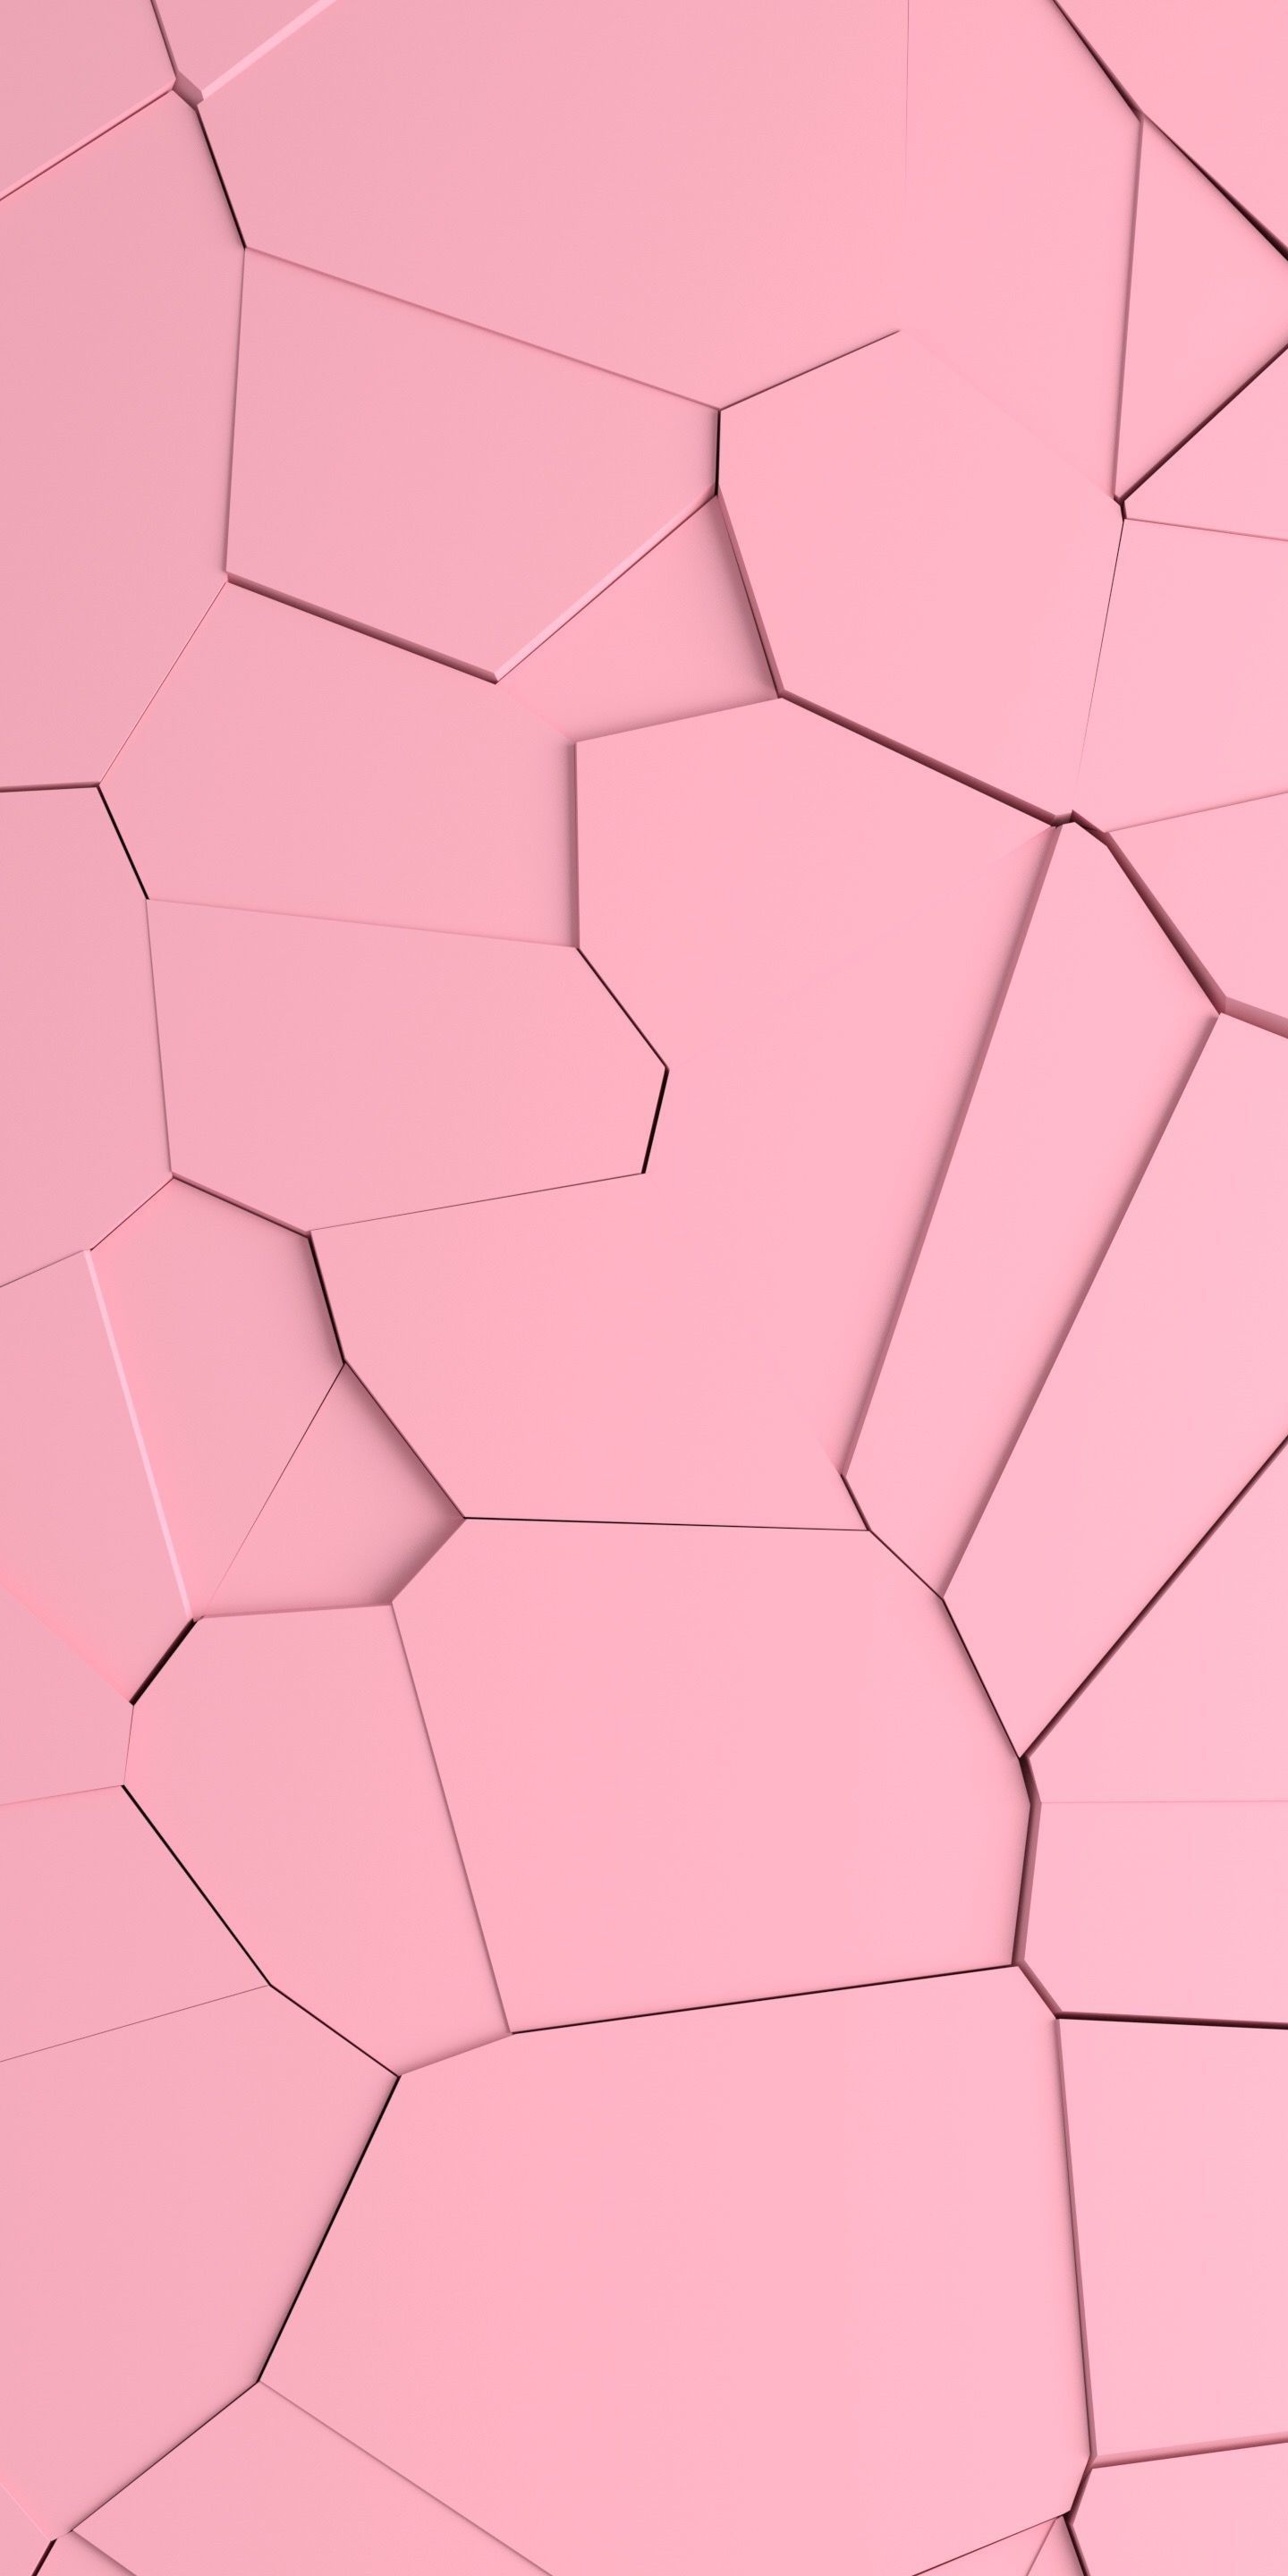 Cute Pink Wallpaper for iPhone. Pink wallpaper iphone, Abstract iphone wallpaper, Pink wallpaper